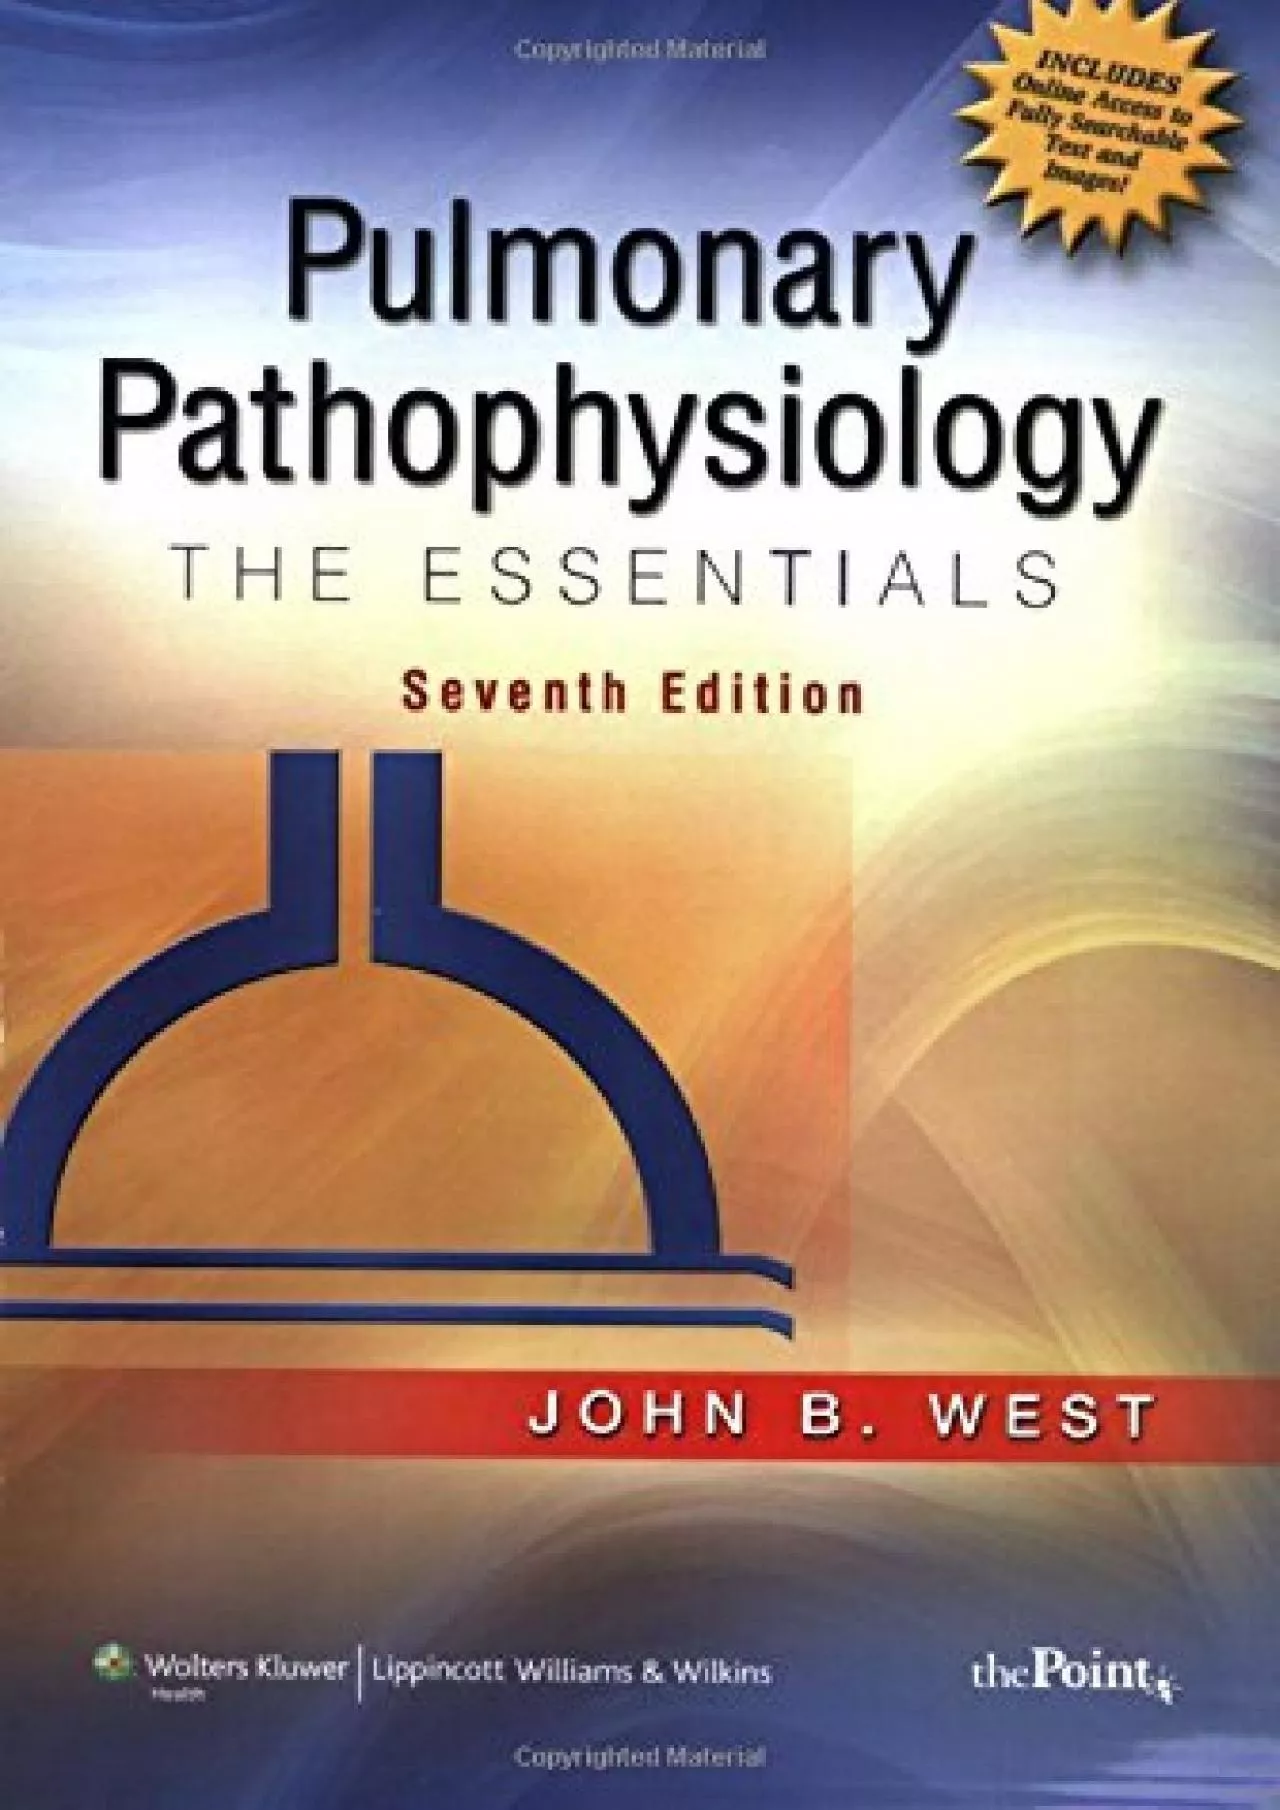 (EBOOK)-Pulmonary Pathophysiology: The Essentials